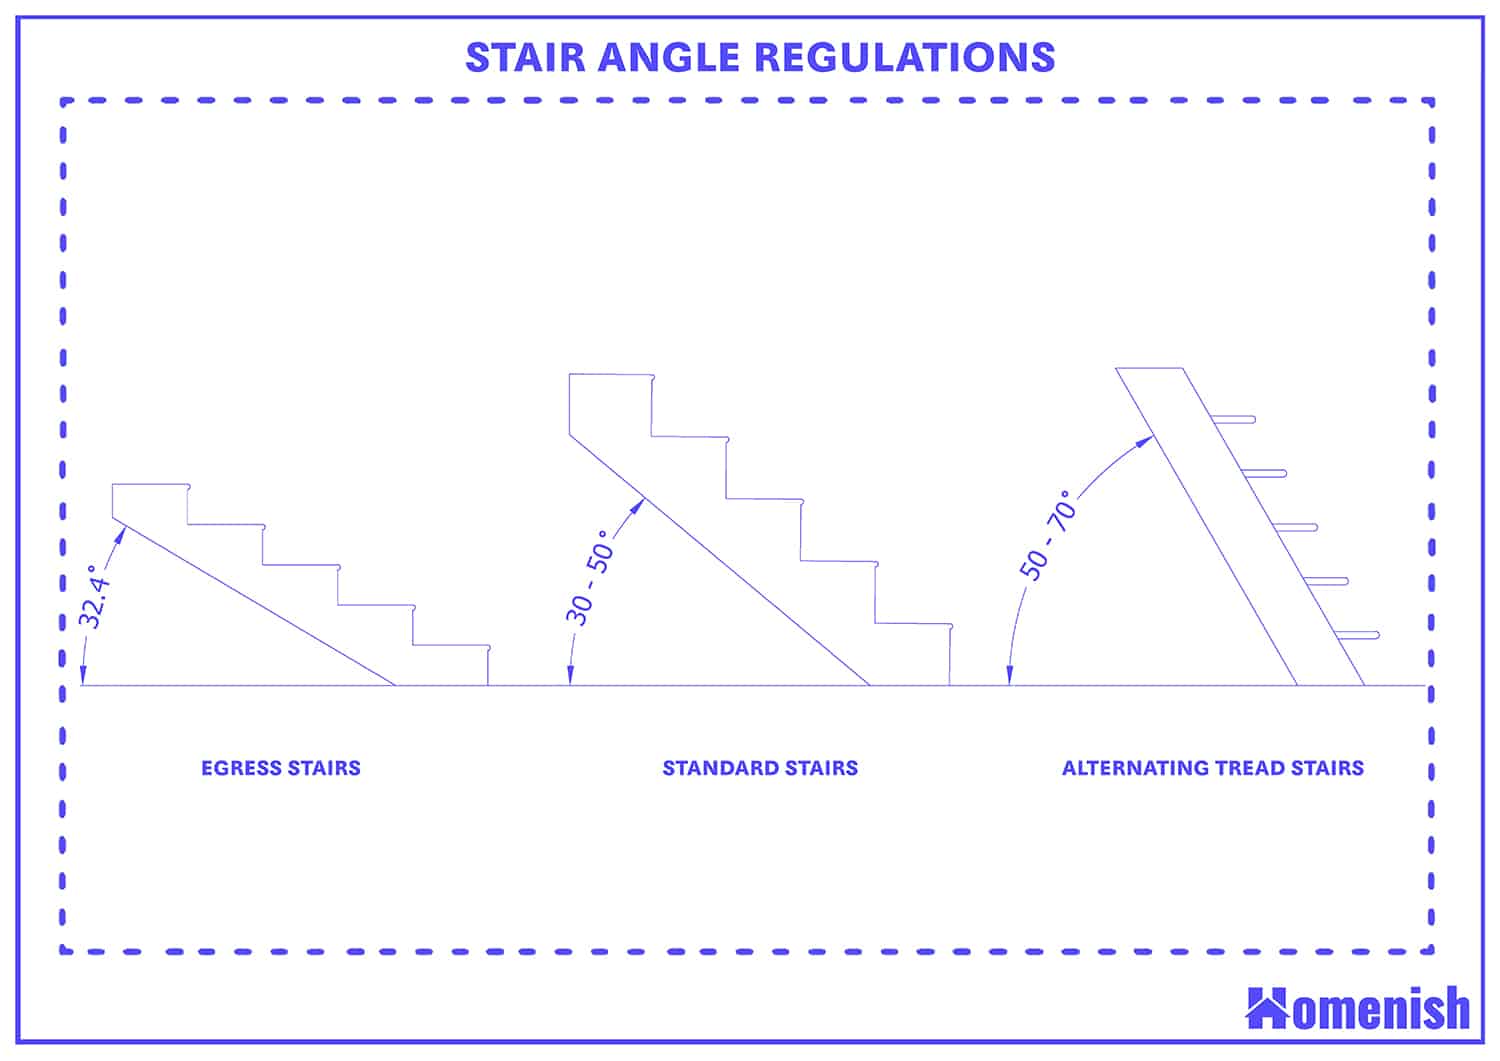 Stair angle regulations